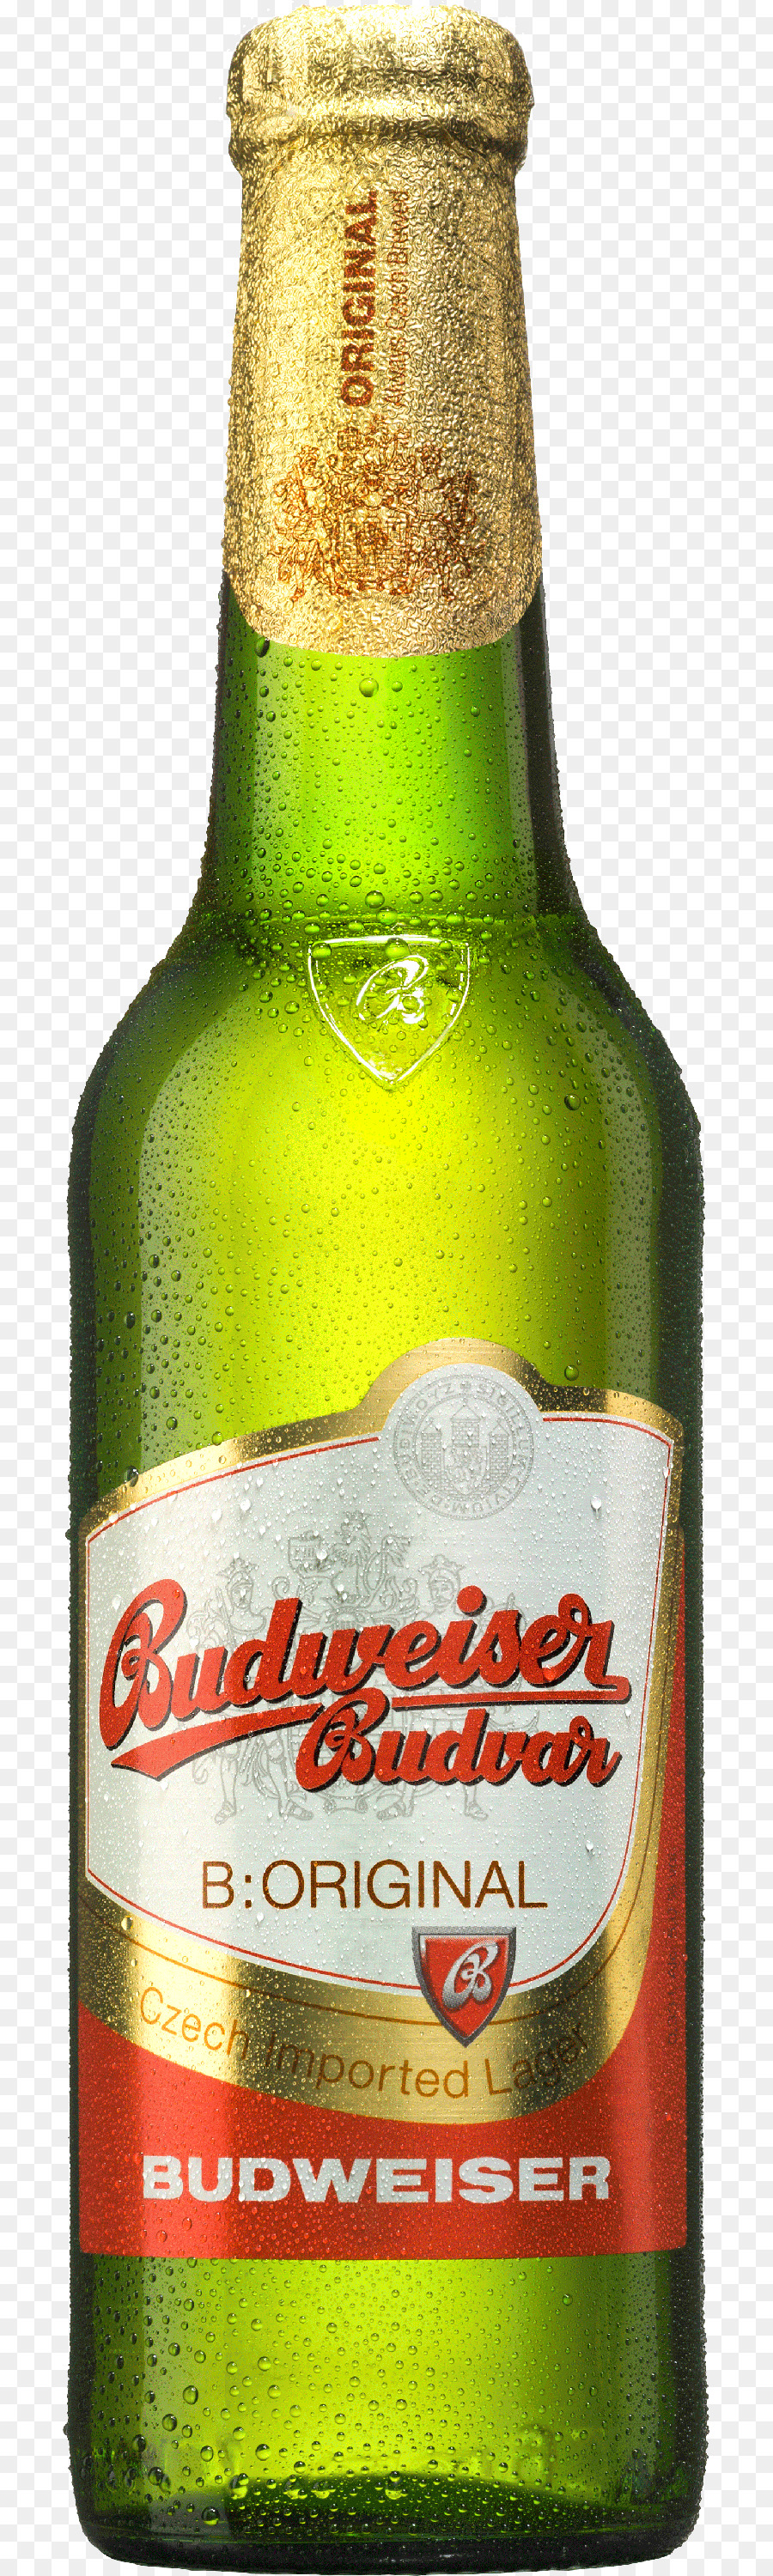 Brauerei Budweiser Budvar Bier Budweis (Ceske Budejovice) Pilsner - Bier